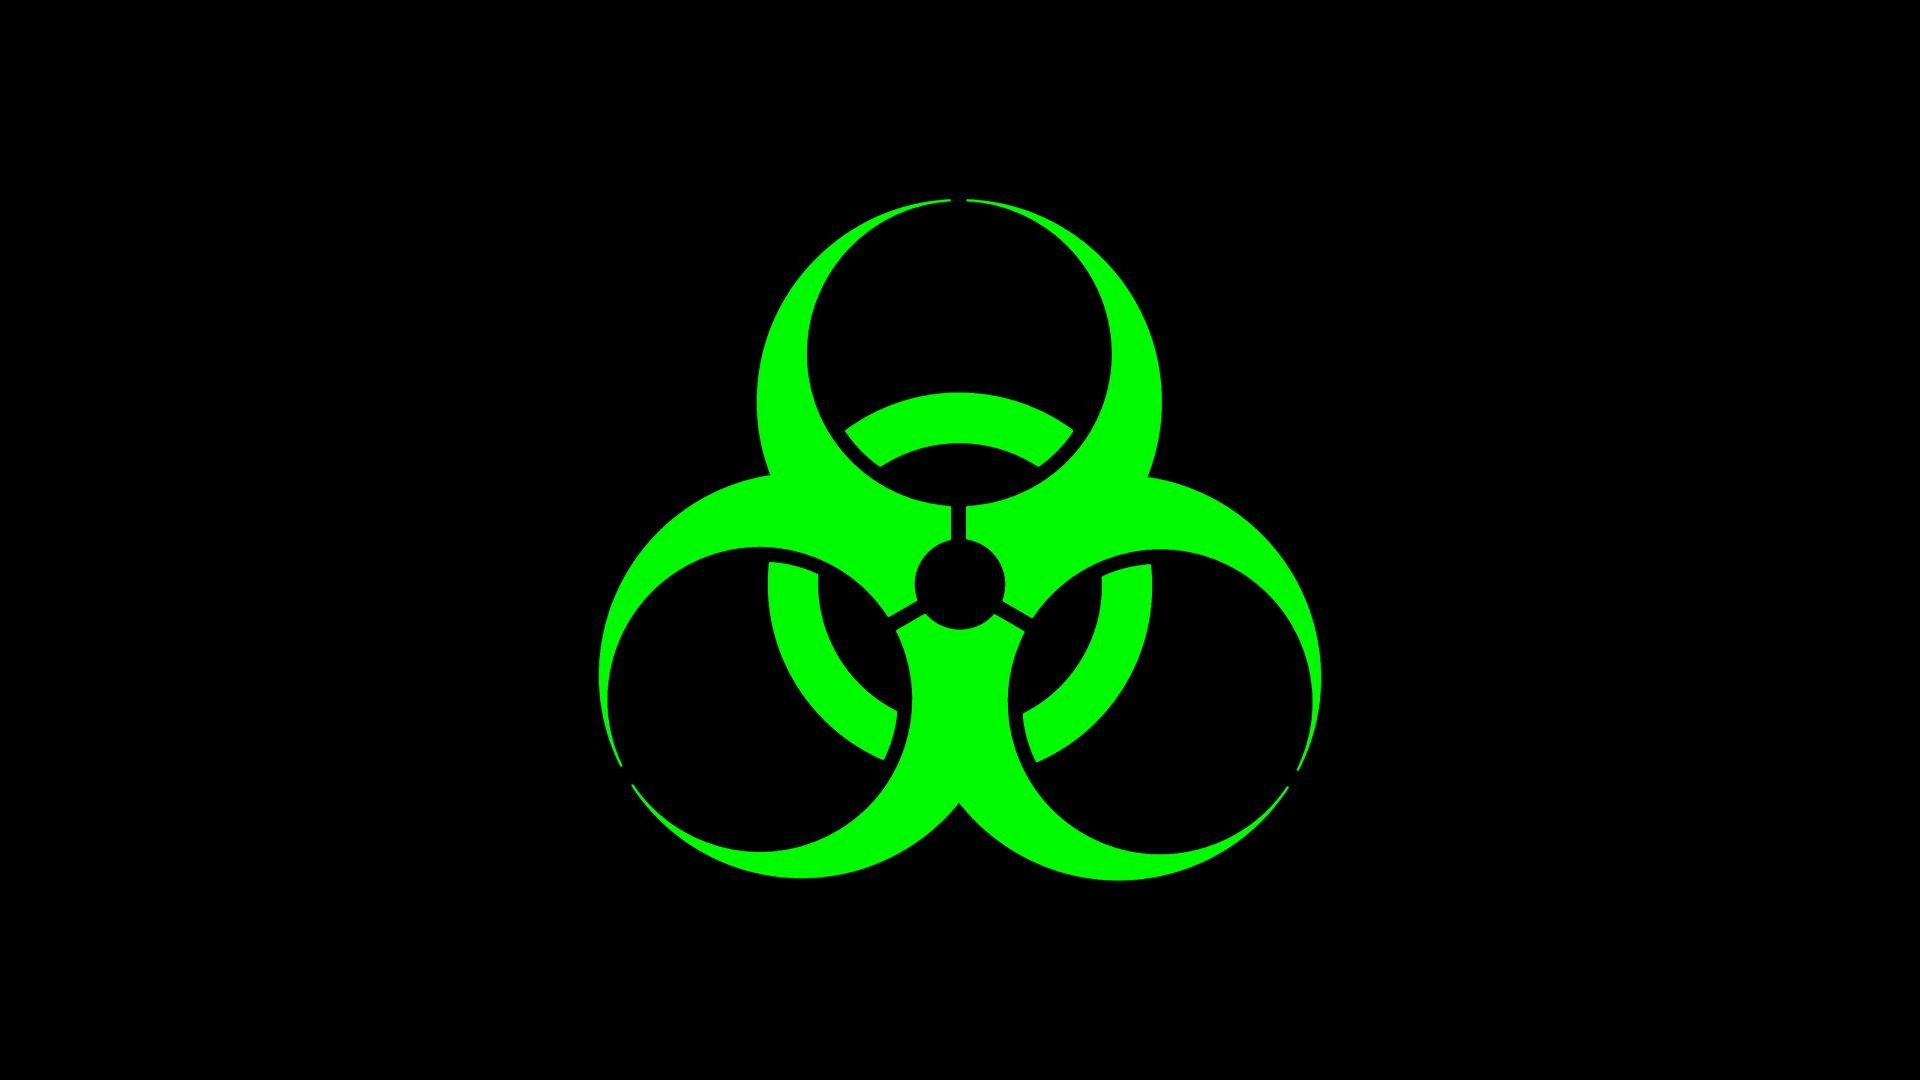 1920x1080 wallpaper.wiki-Download-Free-Biohazard-Symbol-Wallpaper-PIC-